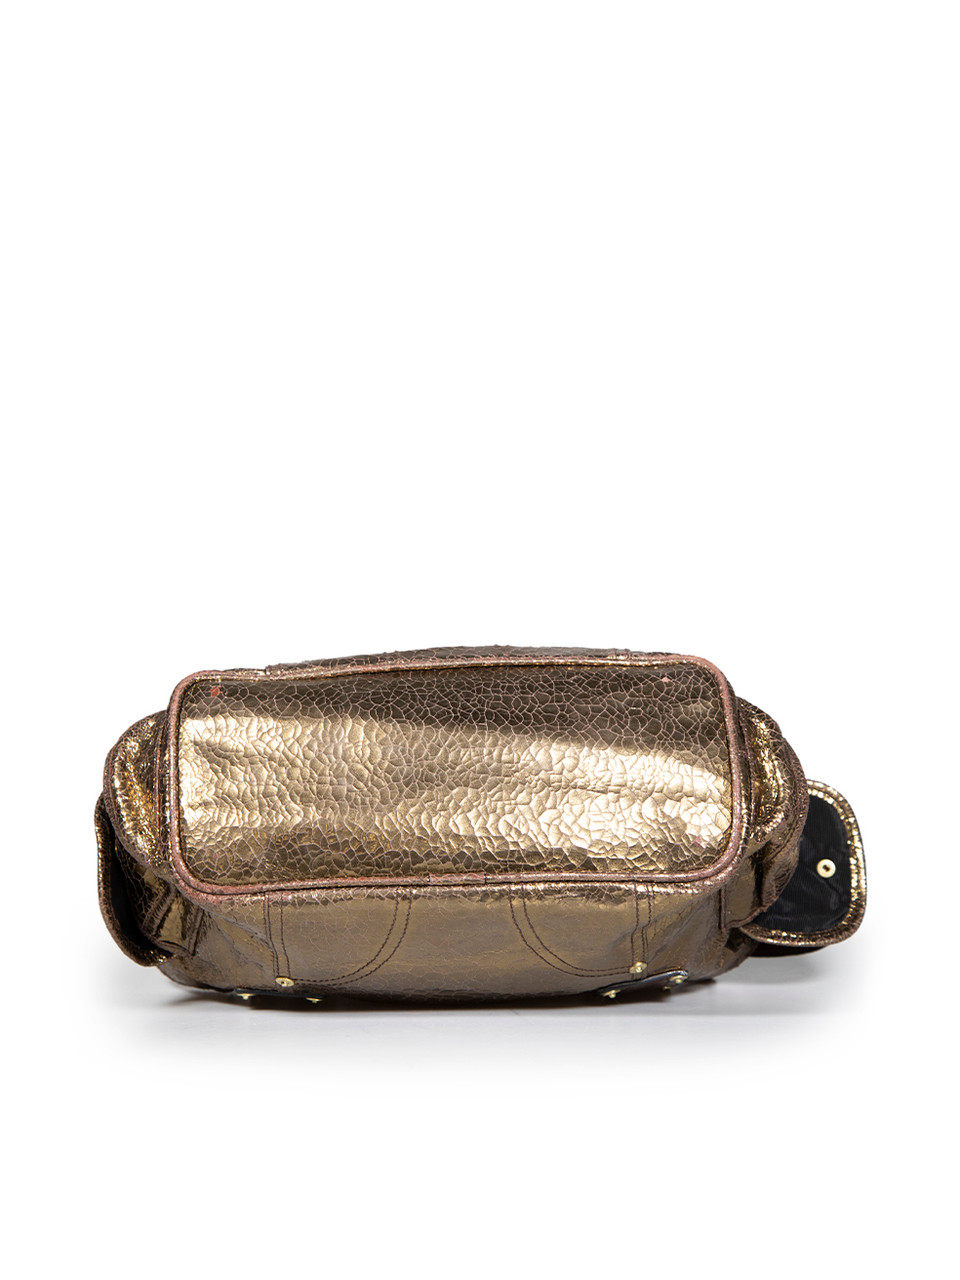 Mulberry Gold Leather Distressed Jody Handbag